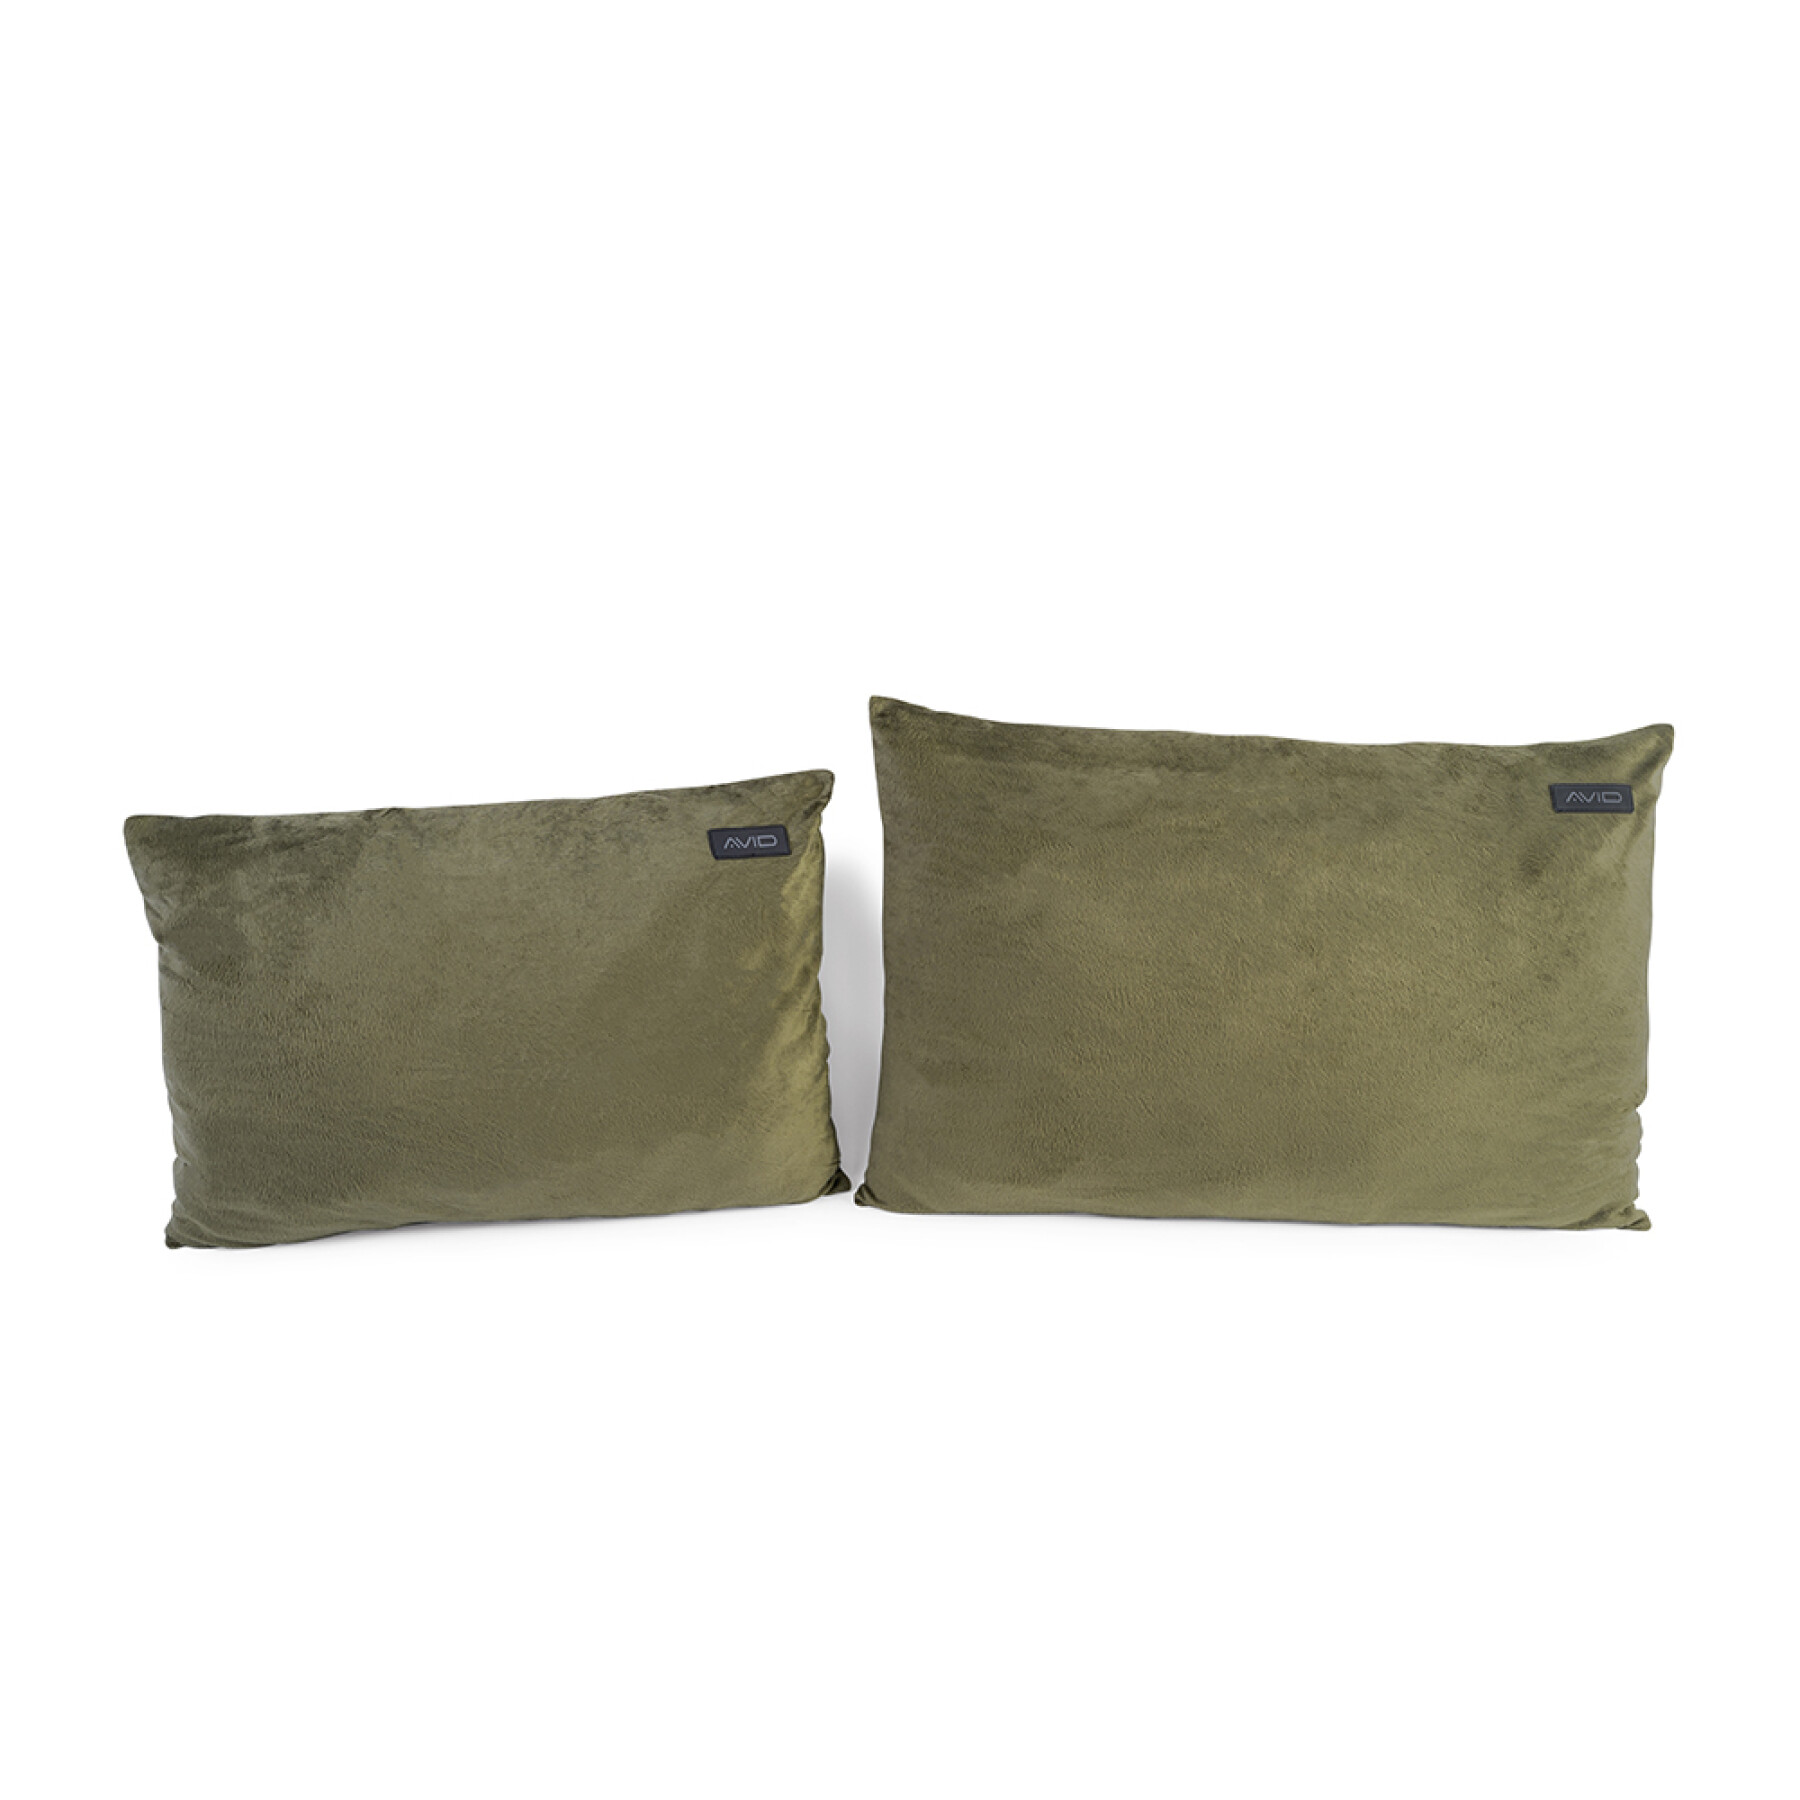 Comfort pillow Avid XL